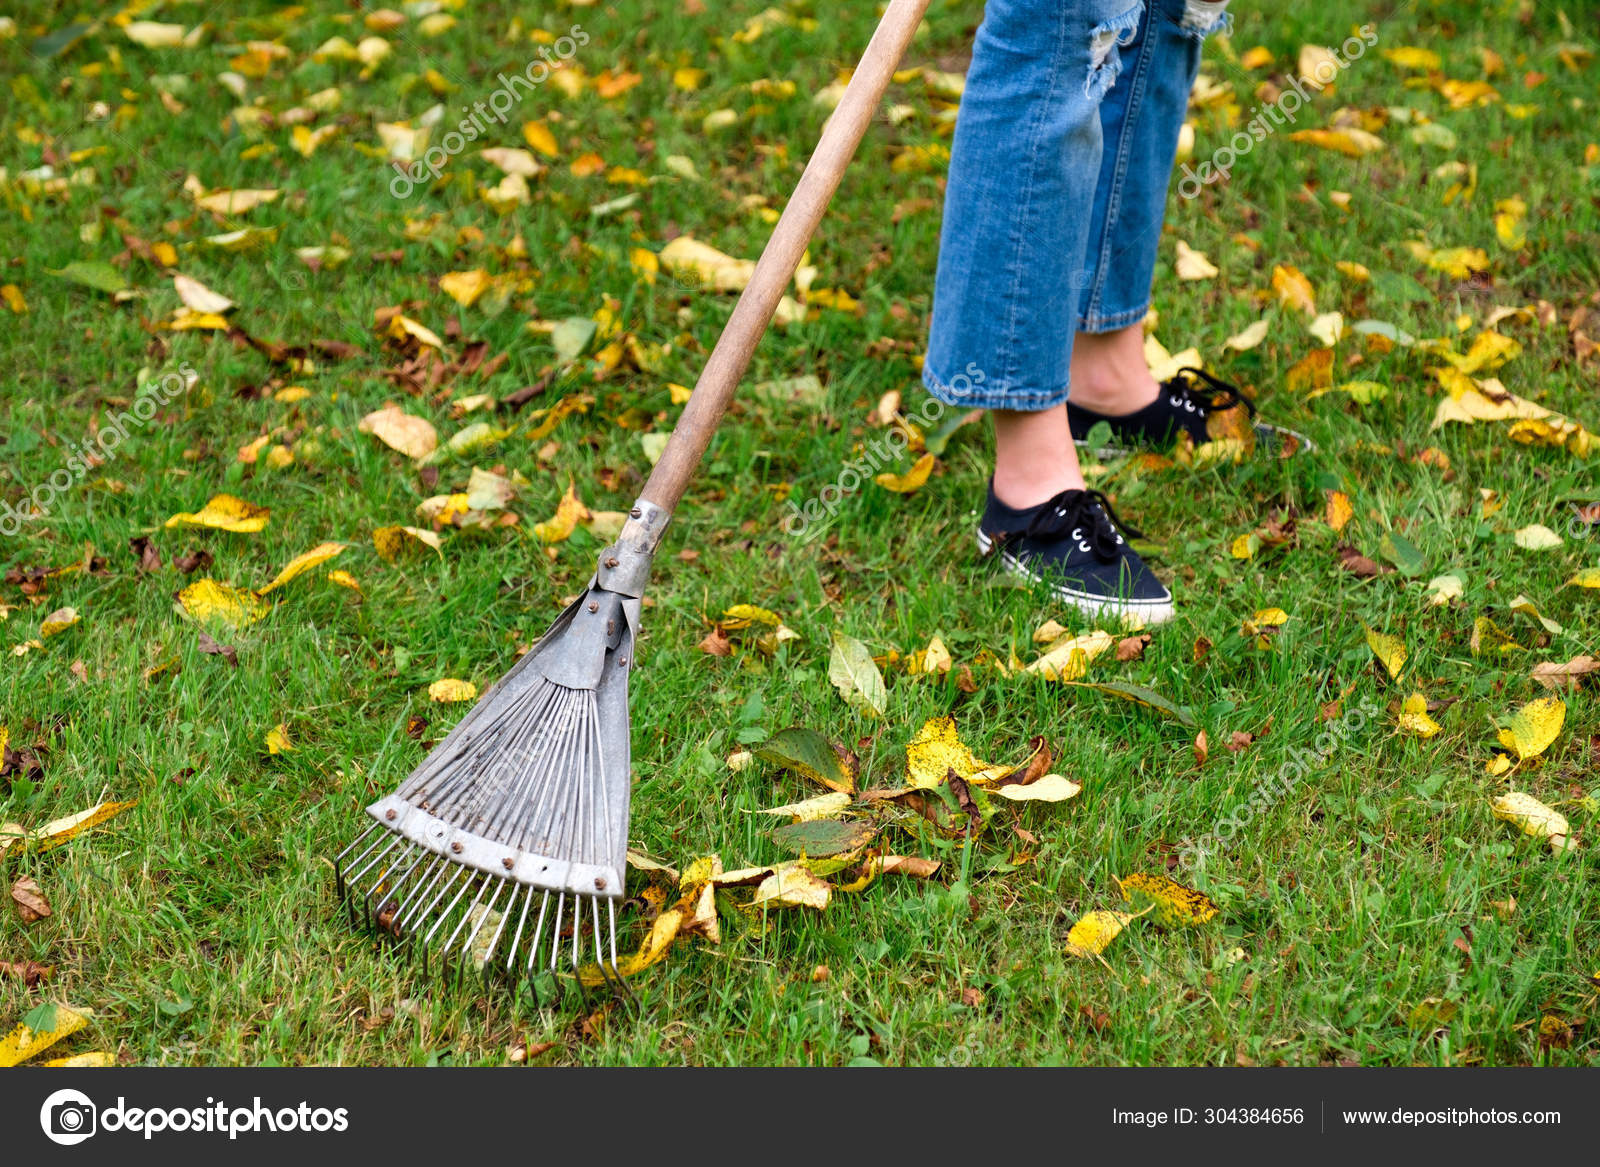 Raking Fall Leaves From Lawn With Leaf Rake In Autumn Seasonal Garden Work Backyard Cleaning Stock Photo